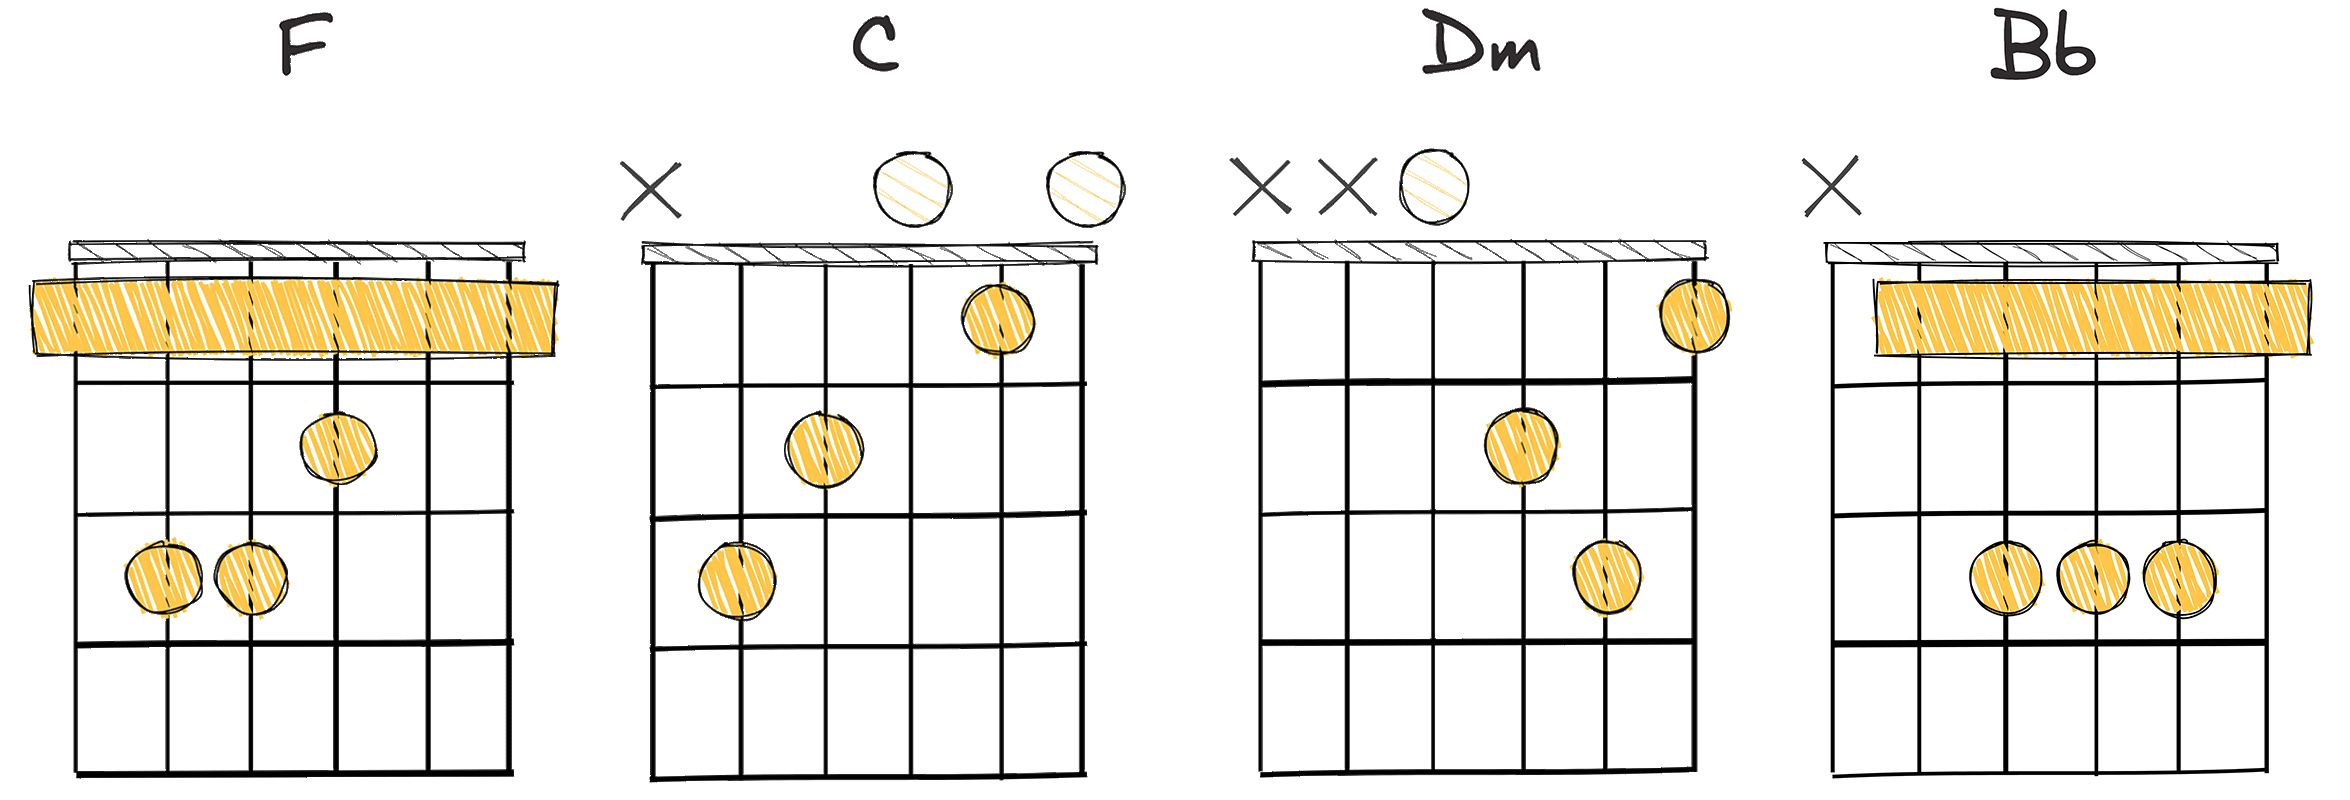 I-V-vi-IV (1-5-6-4) chords diagram